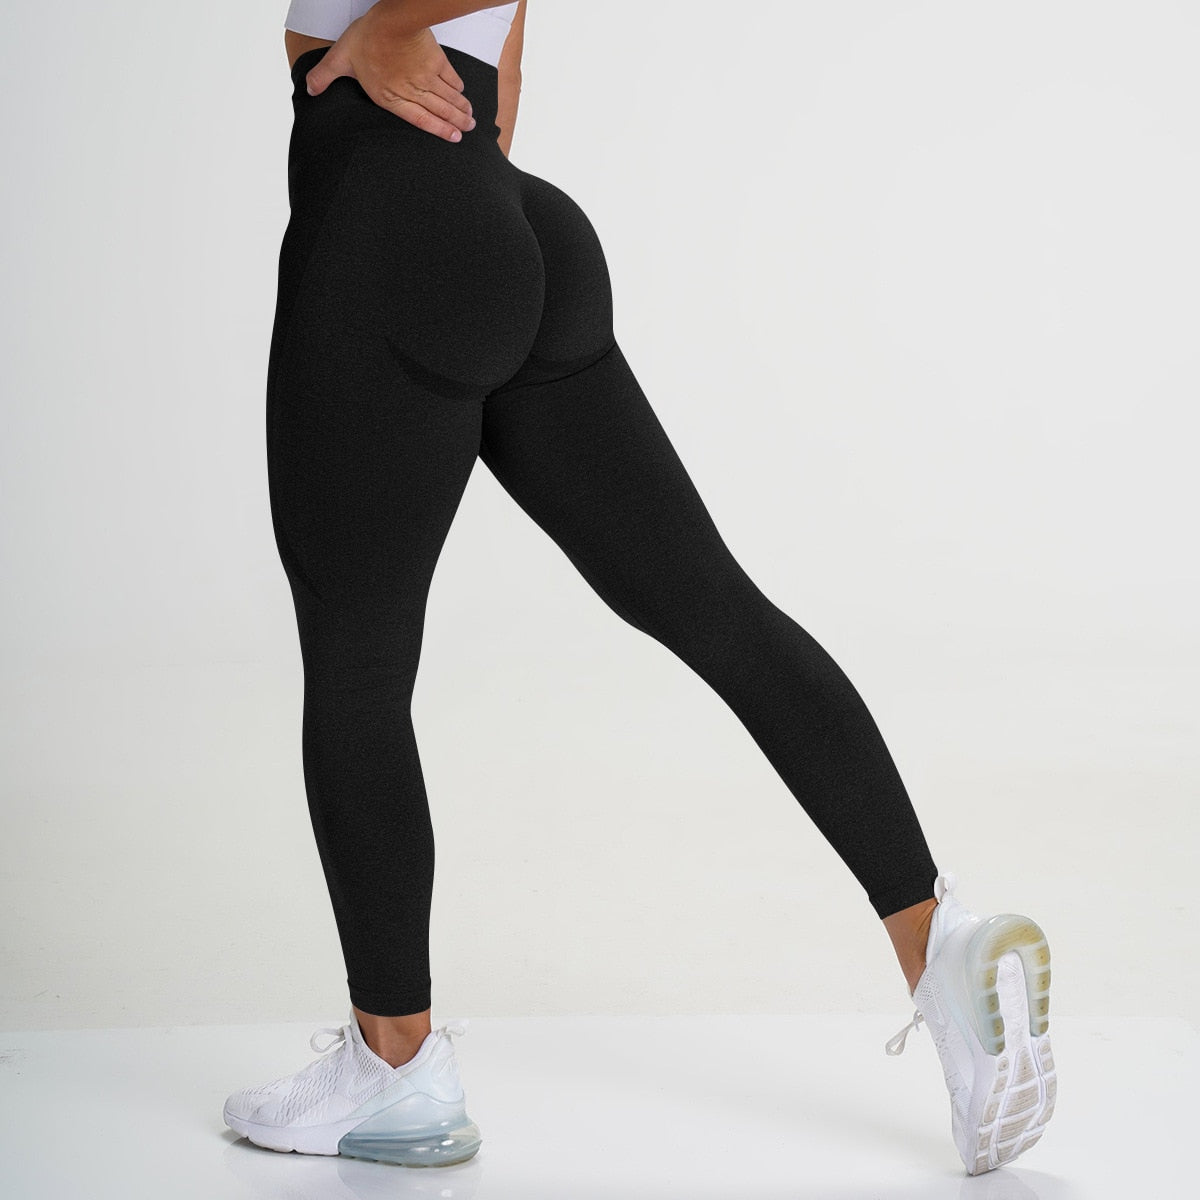 Seamless Leggings Women Sport Slim ShortsTights Fitness High Waist Women Clothing Gym Workout Pants Female Pants black